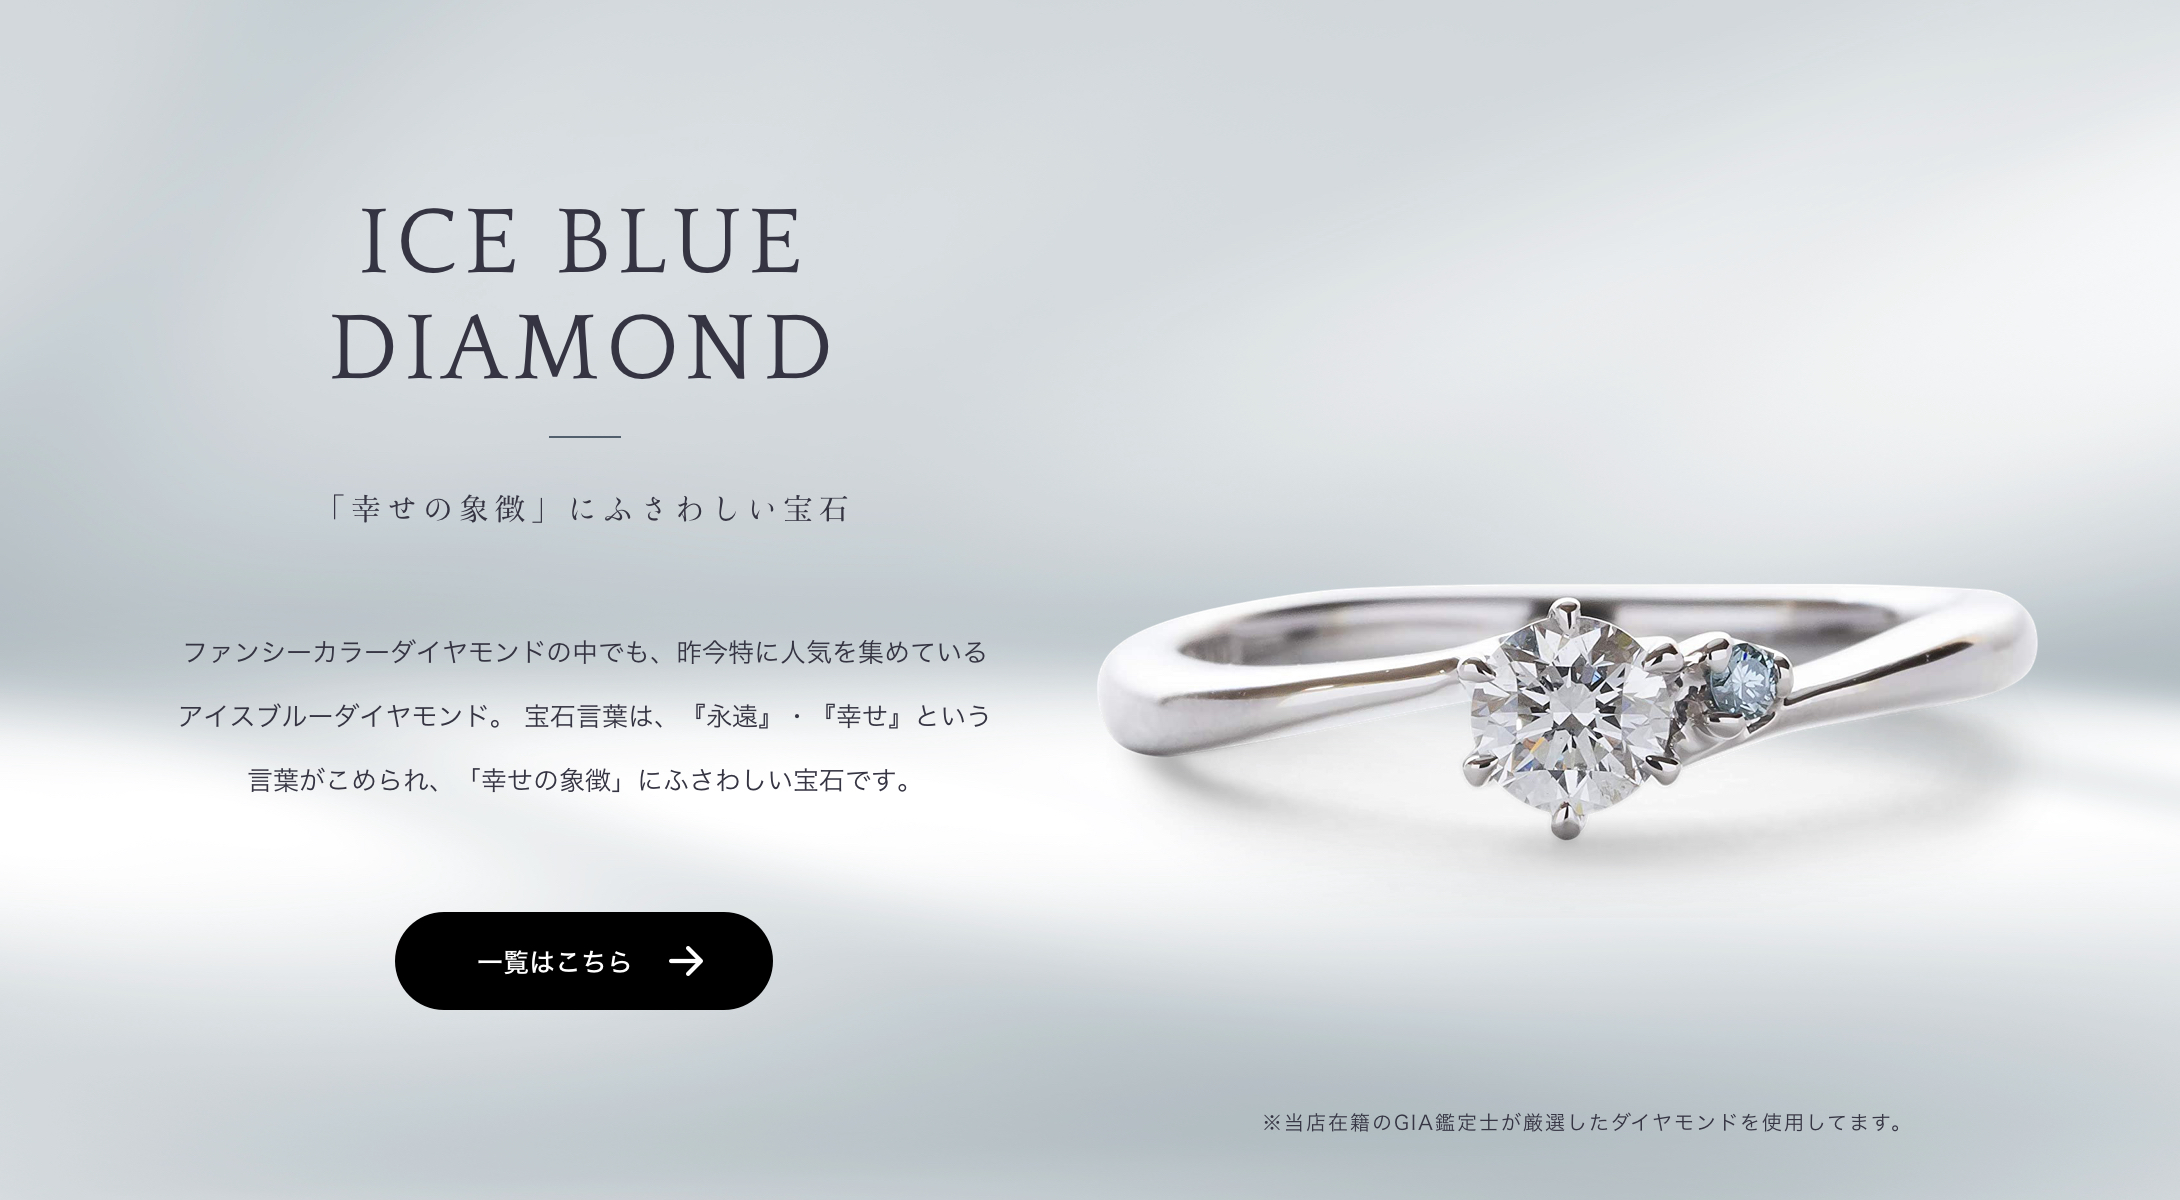 ICE BLUE DIAMOND　「幸せの象徴」にふさわしい宝石